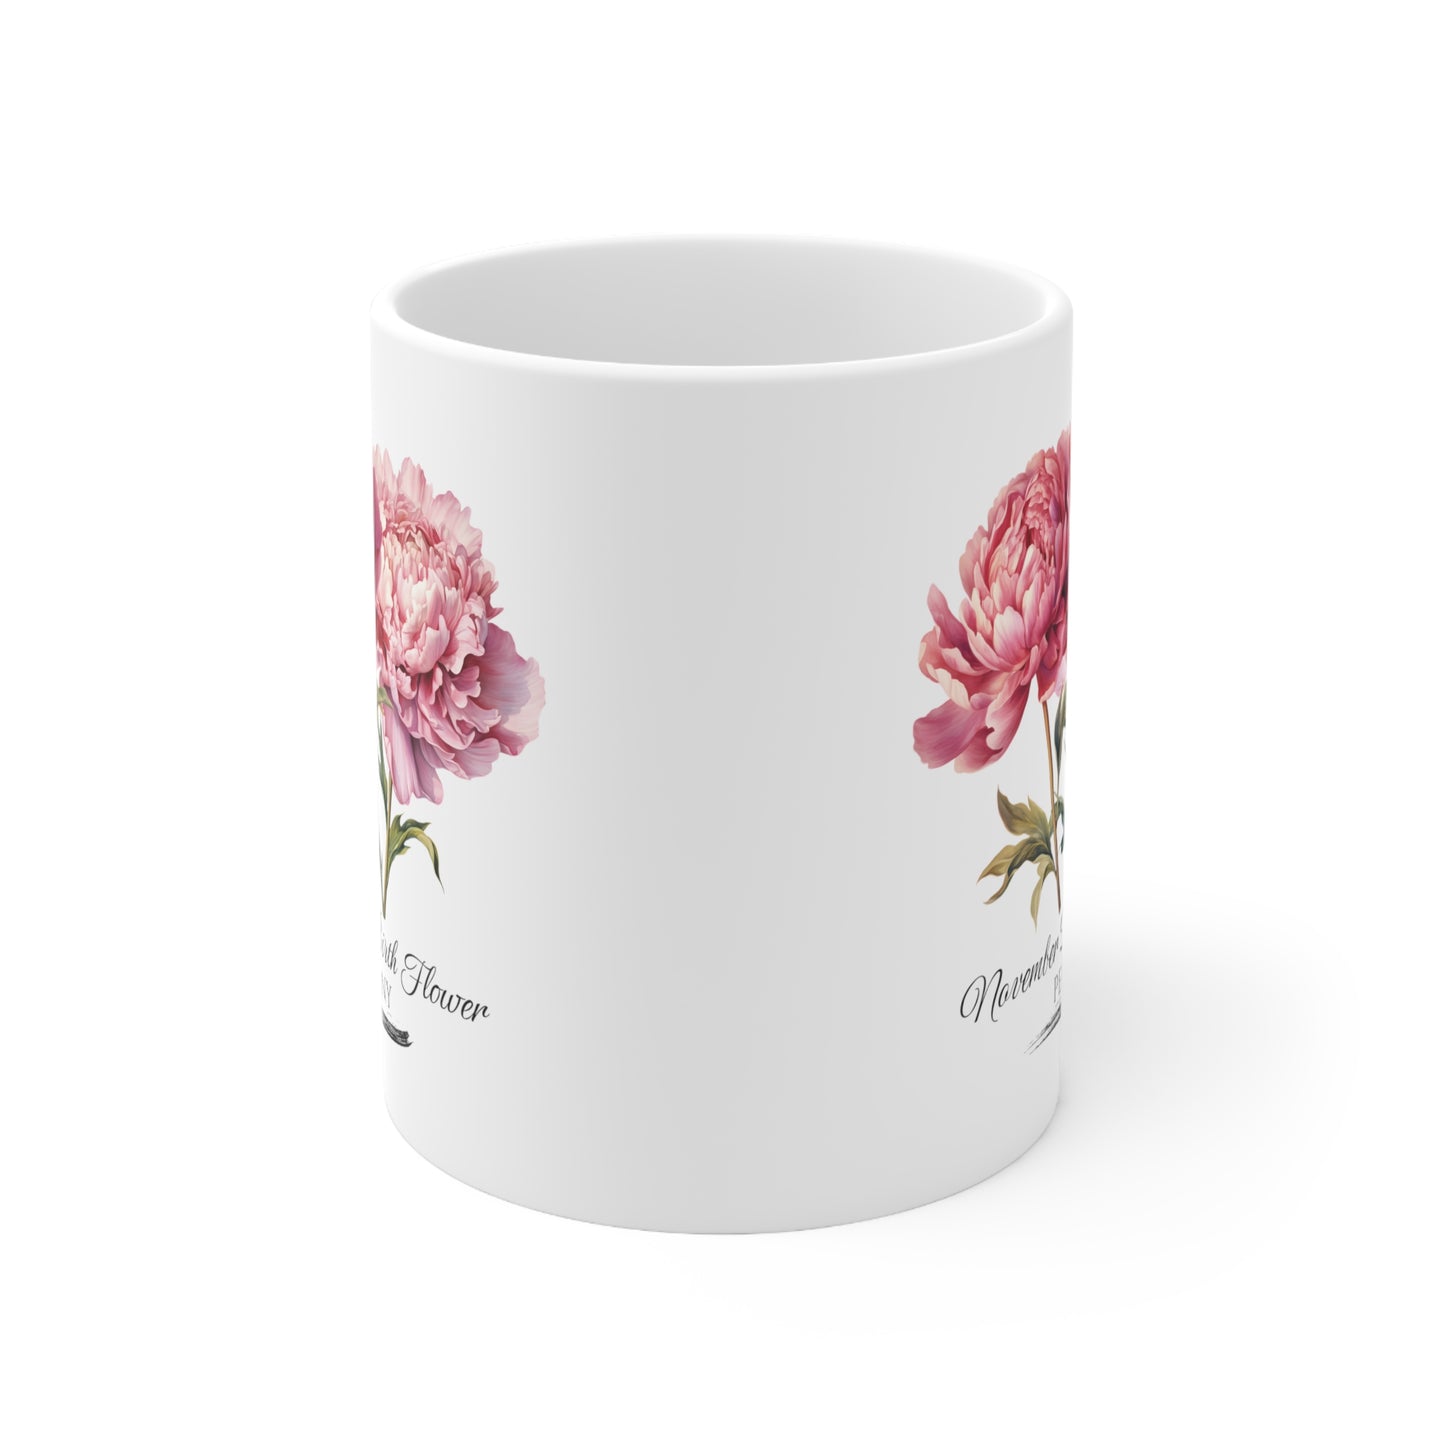 November Birth Flower (Peony): Ceramic Mug 11oz